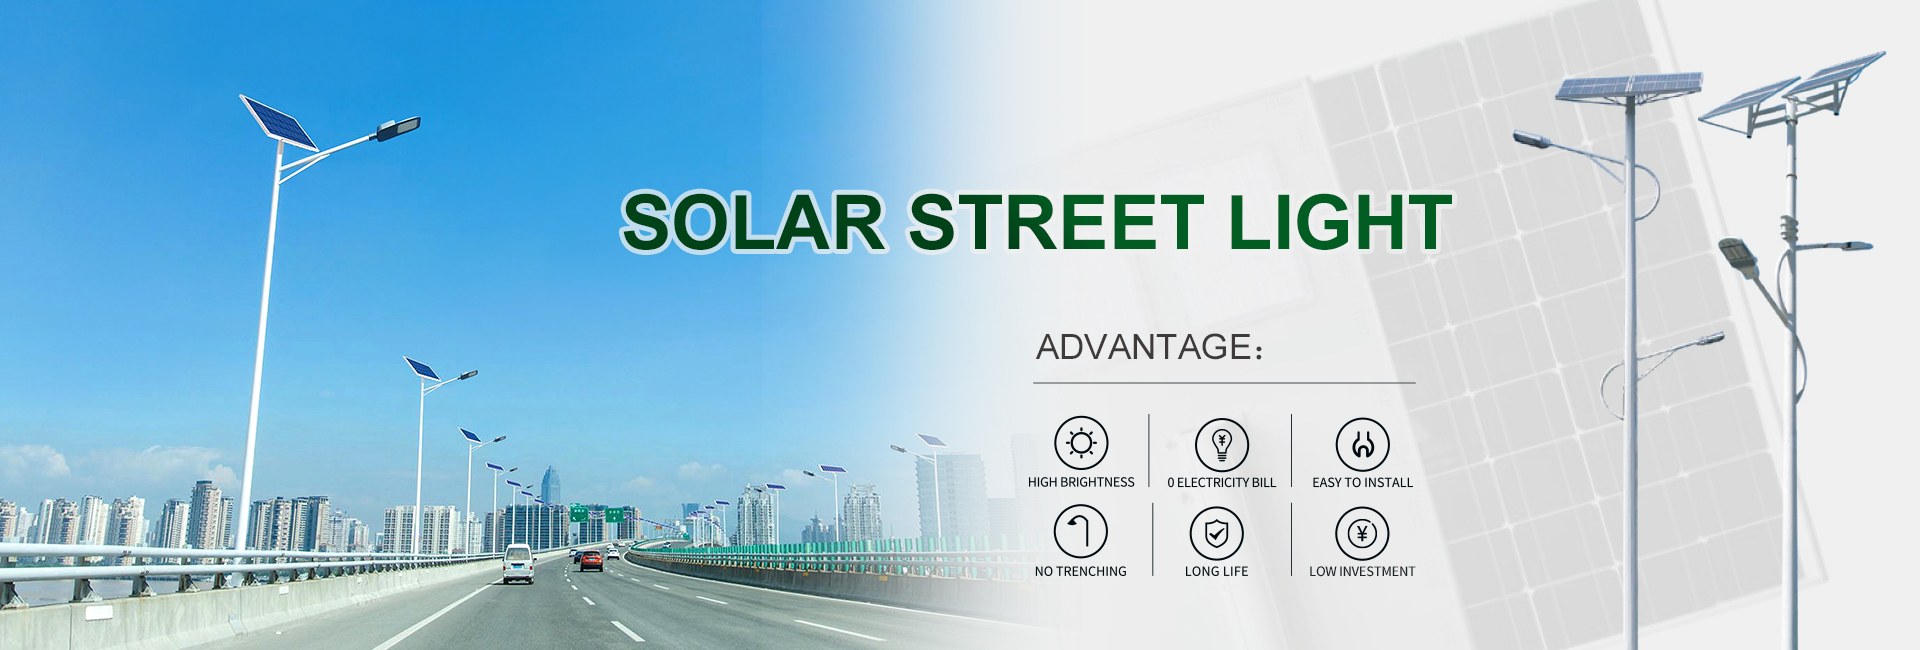 All In One Solar Street Light